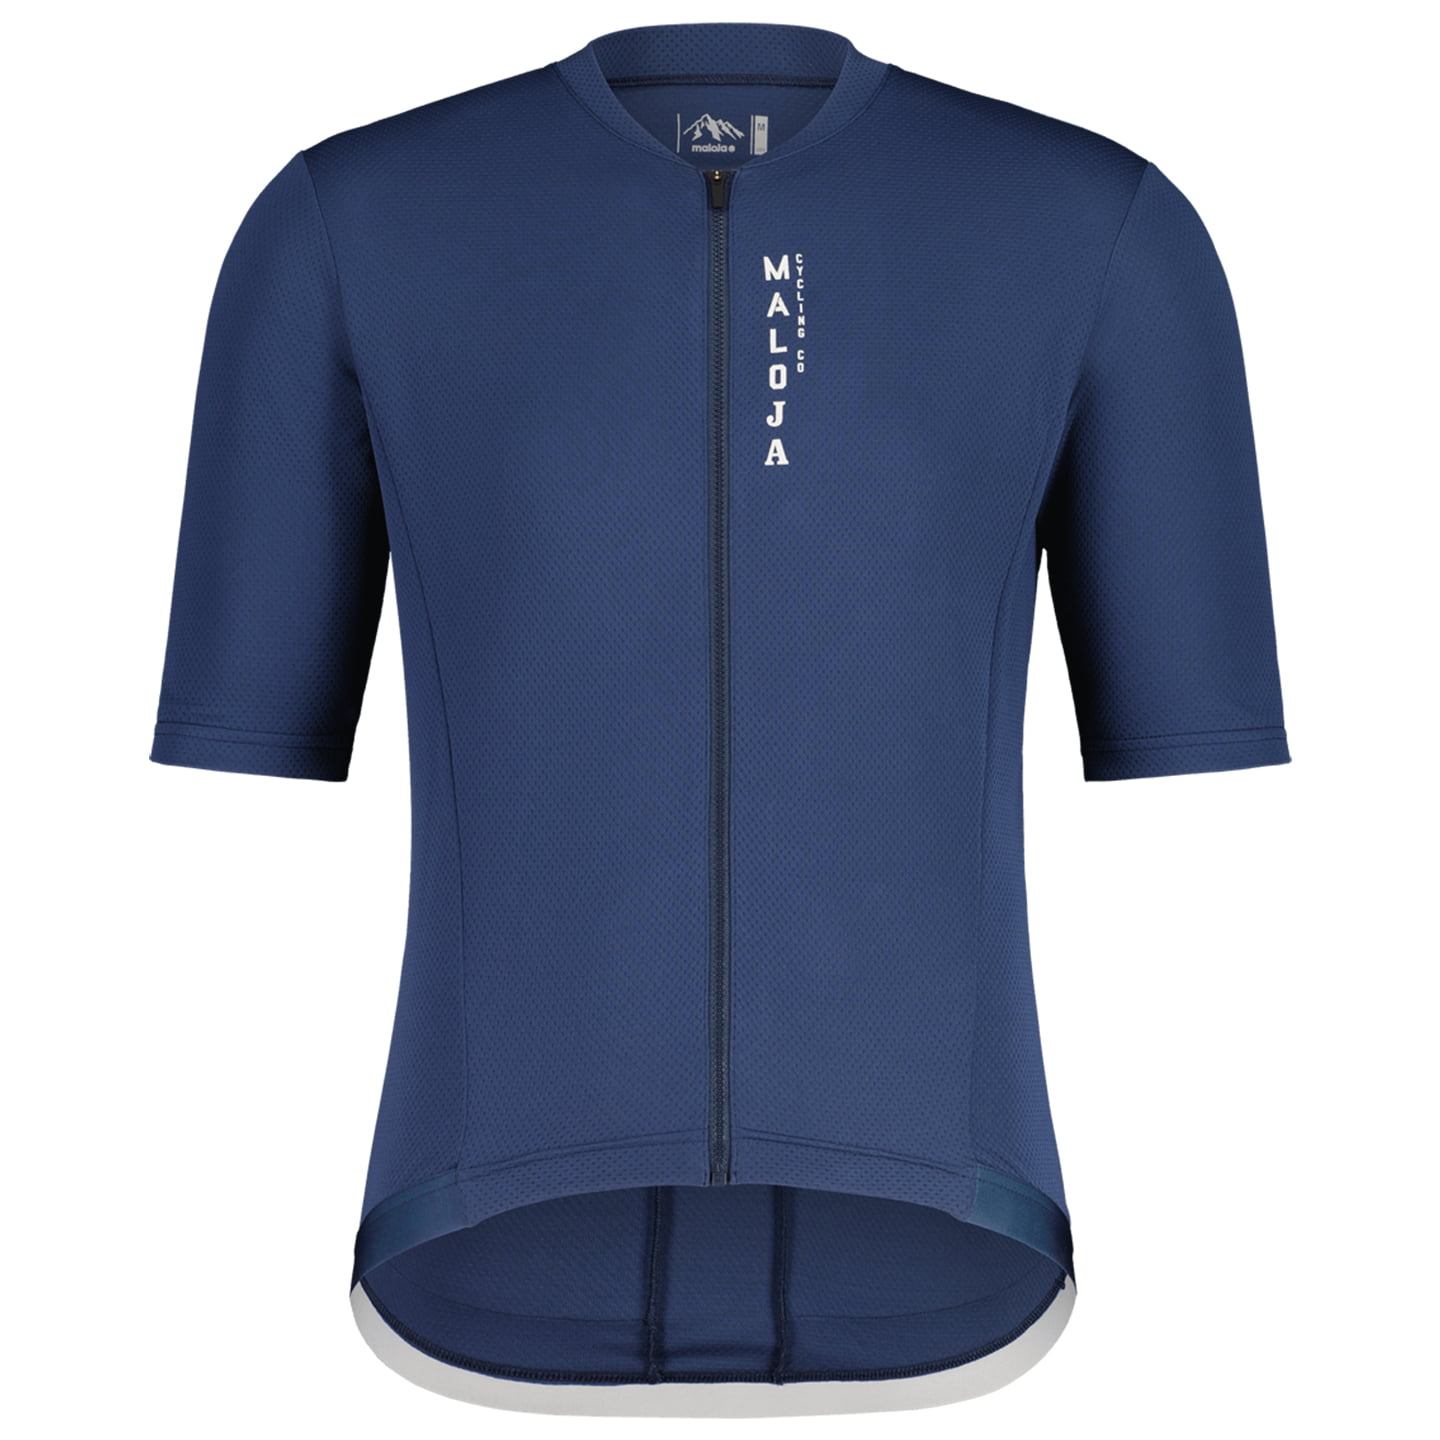 MALOJA ChivayM. Short Sleeve Jersey Short Sleeve Jersey, for men, size M, Cycling jersey, Cycling clothing